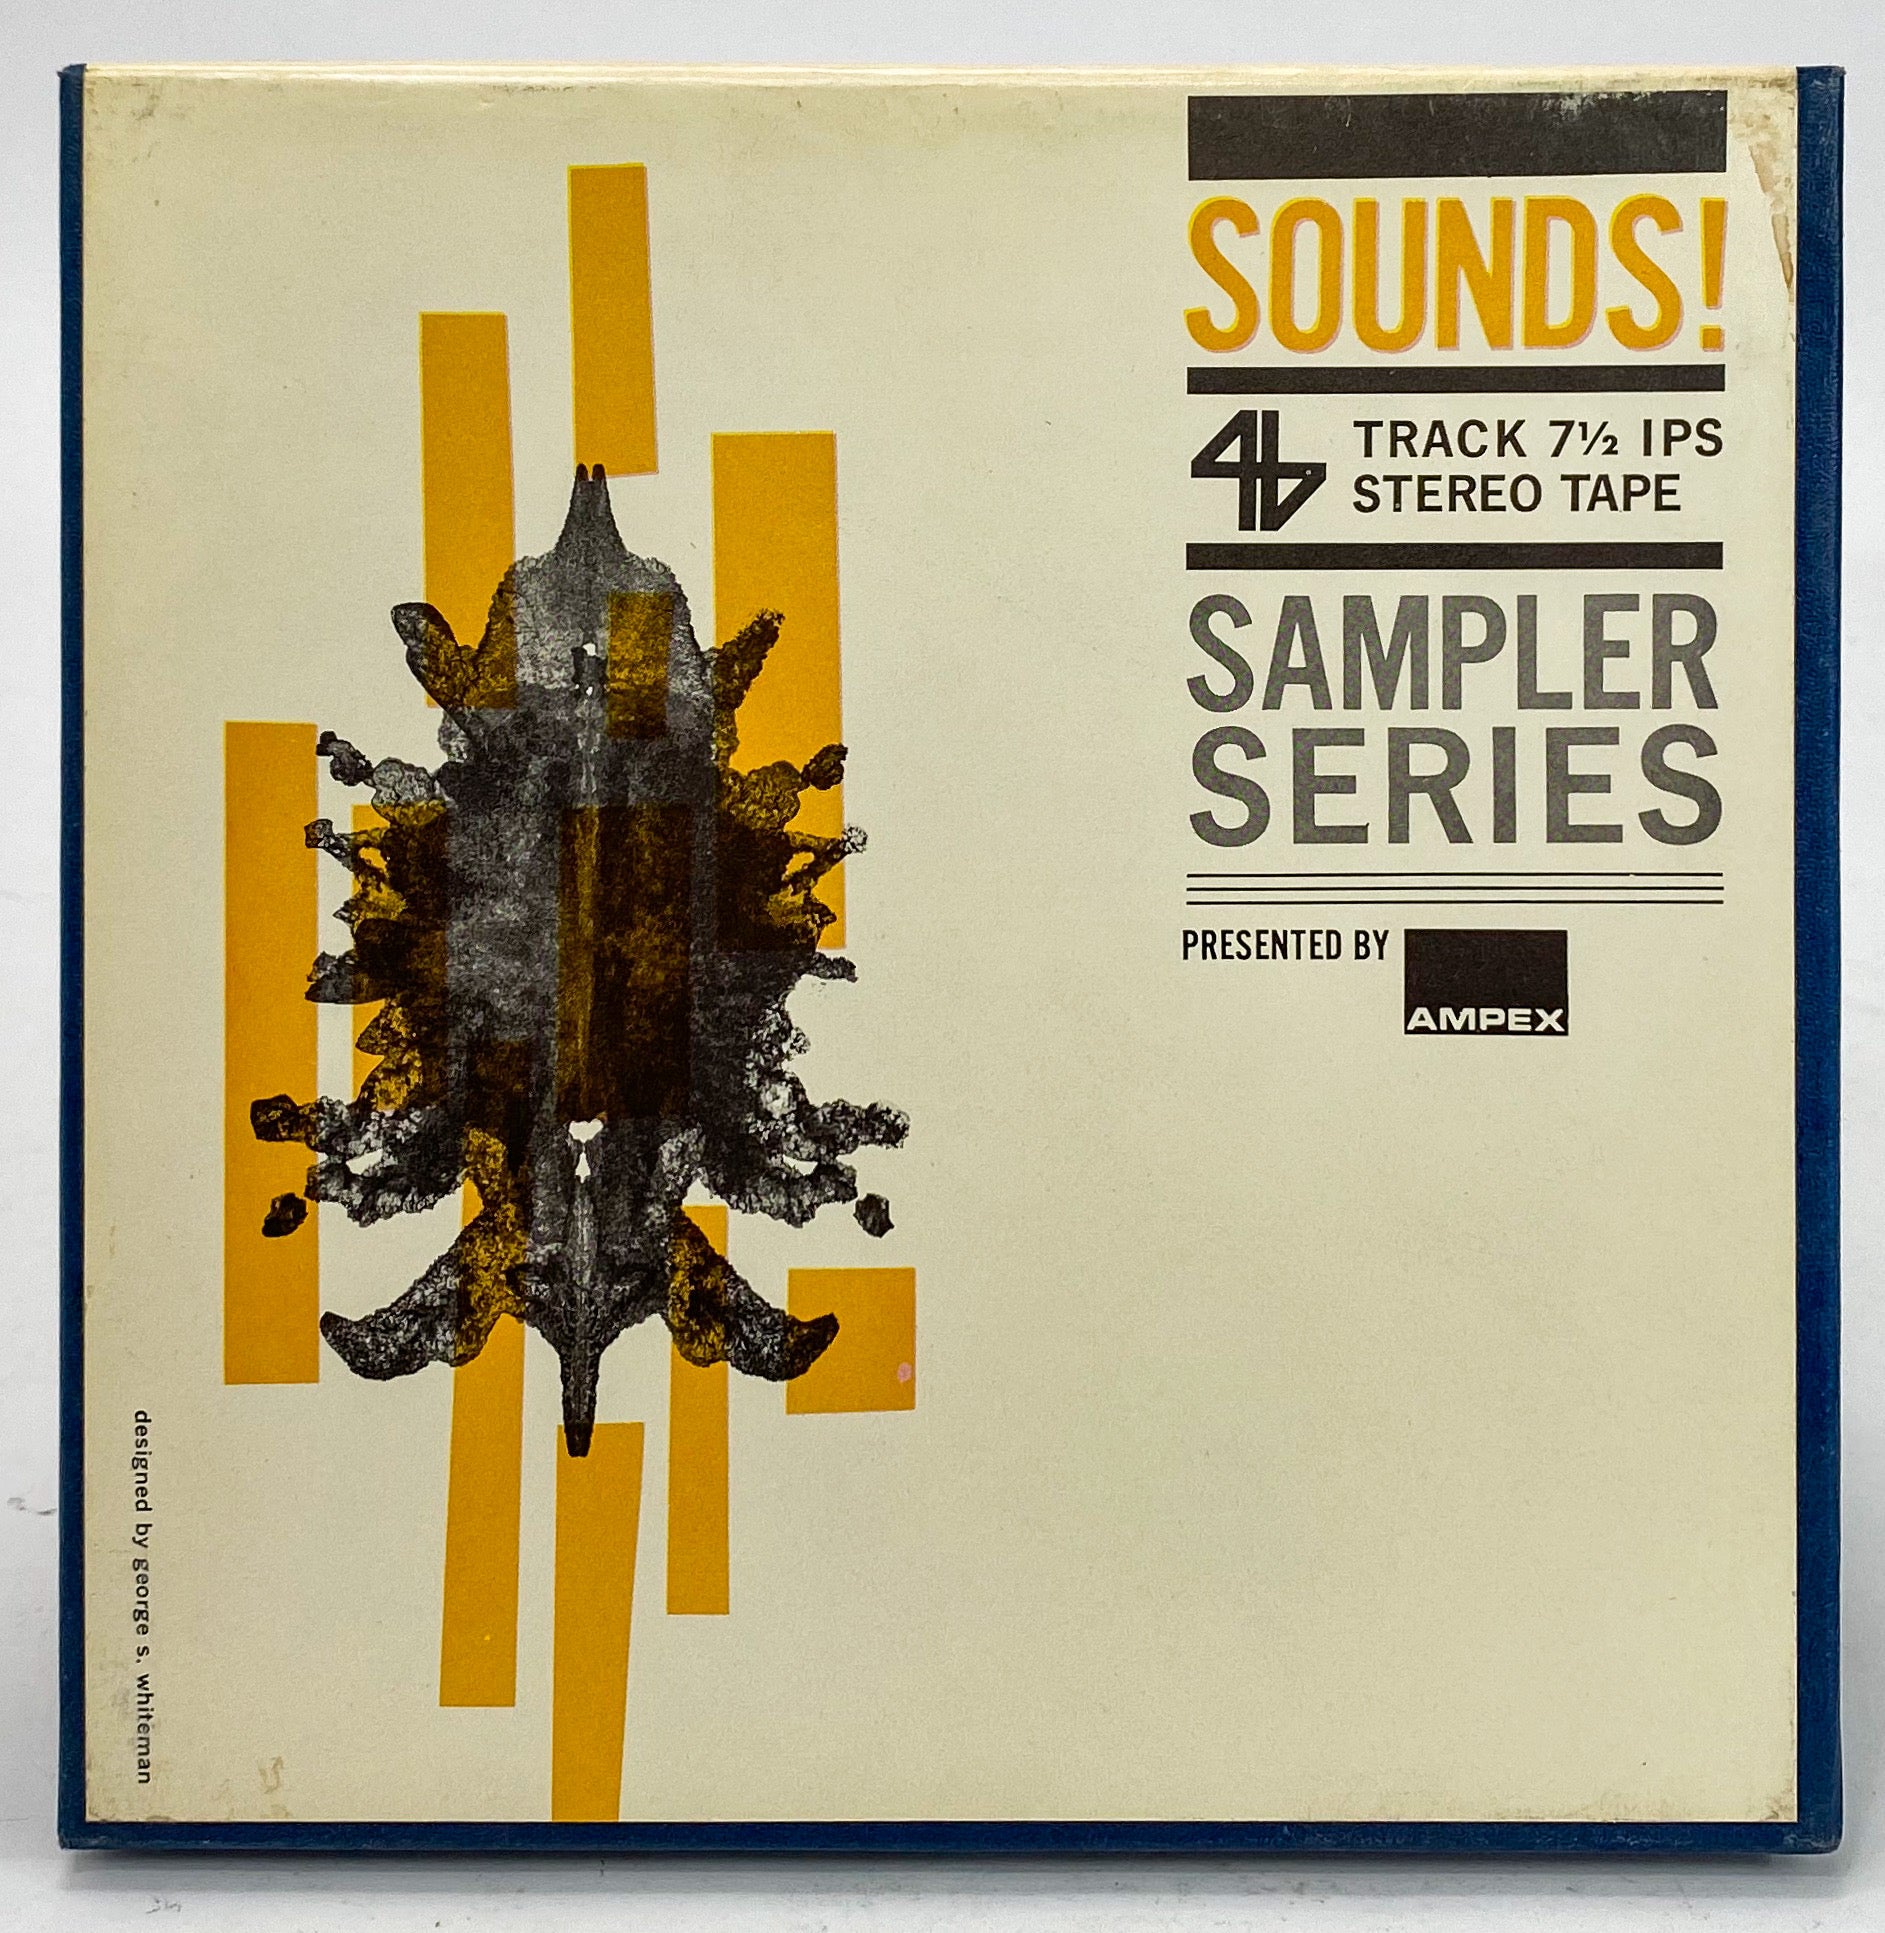 Ampex Sampler Series Sounds Reel to Reel Tape 7 1/2 IPS 4 Track